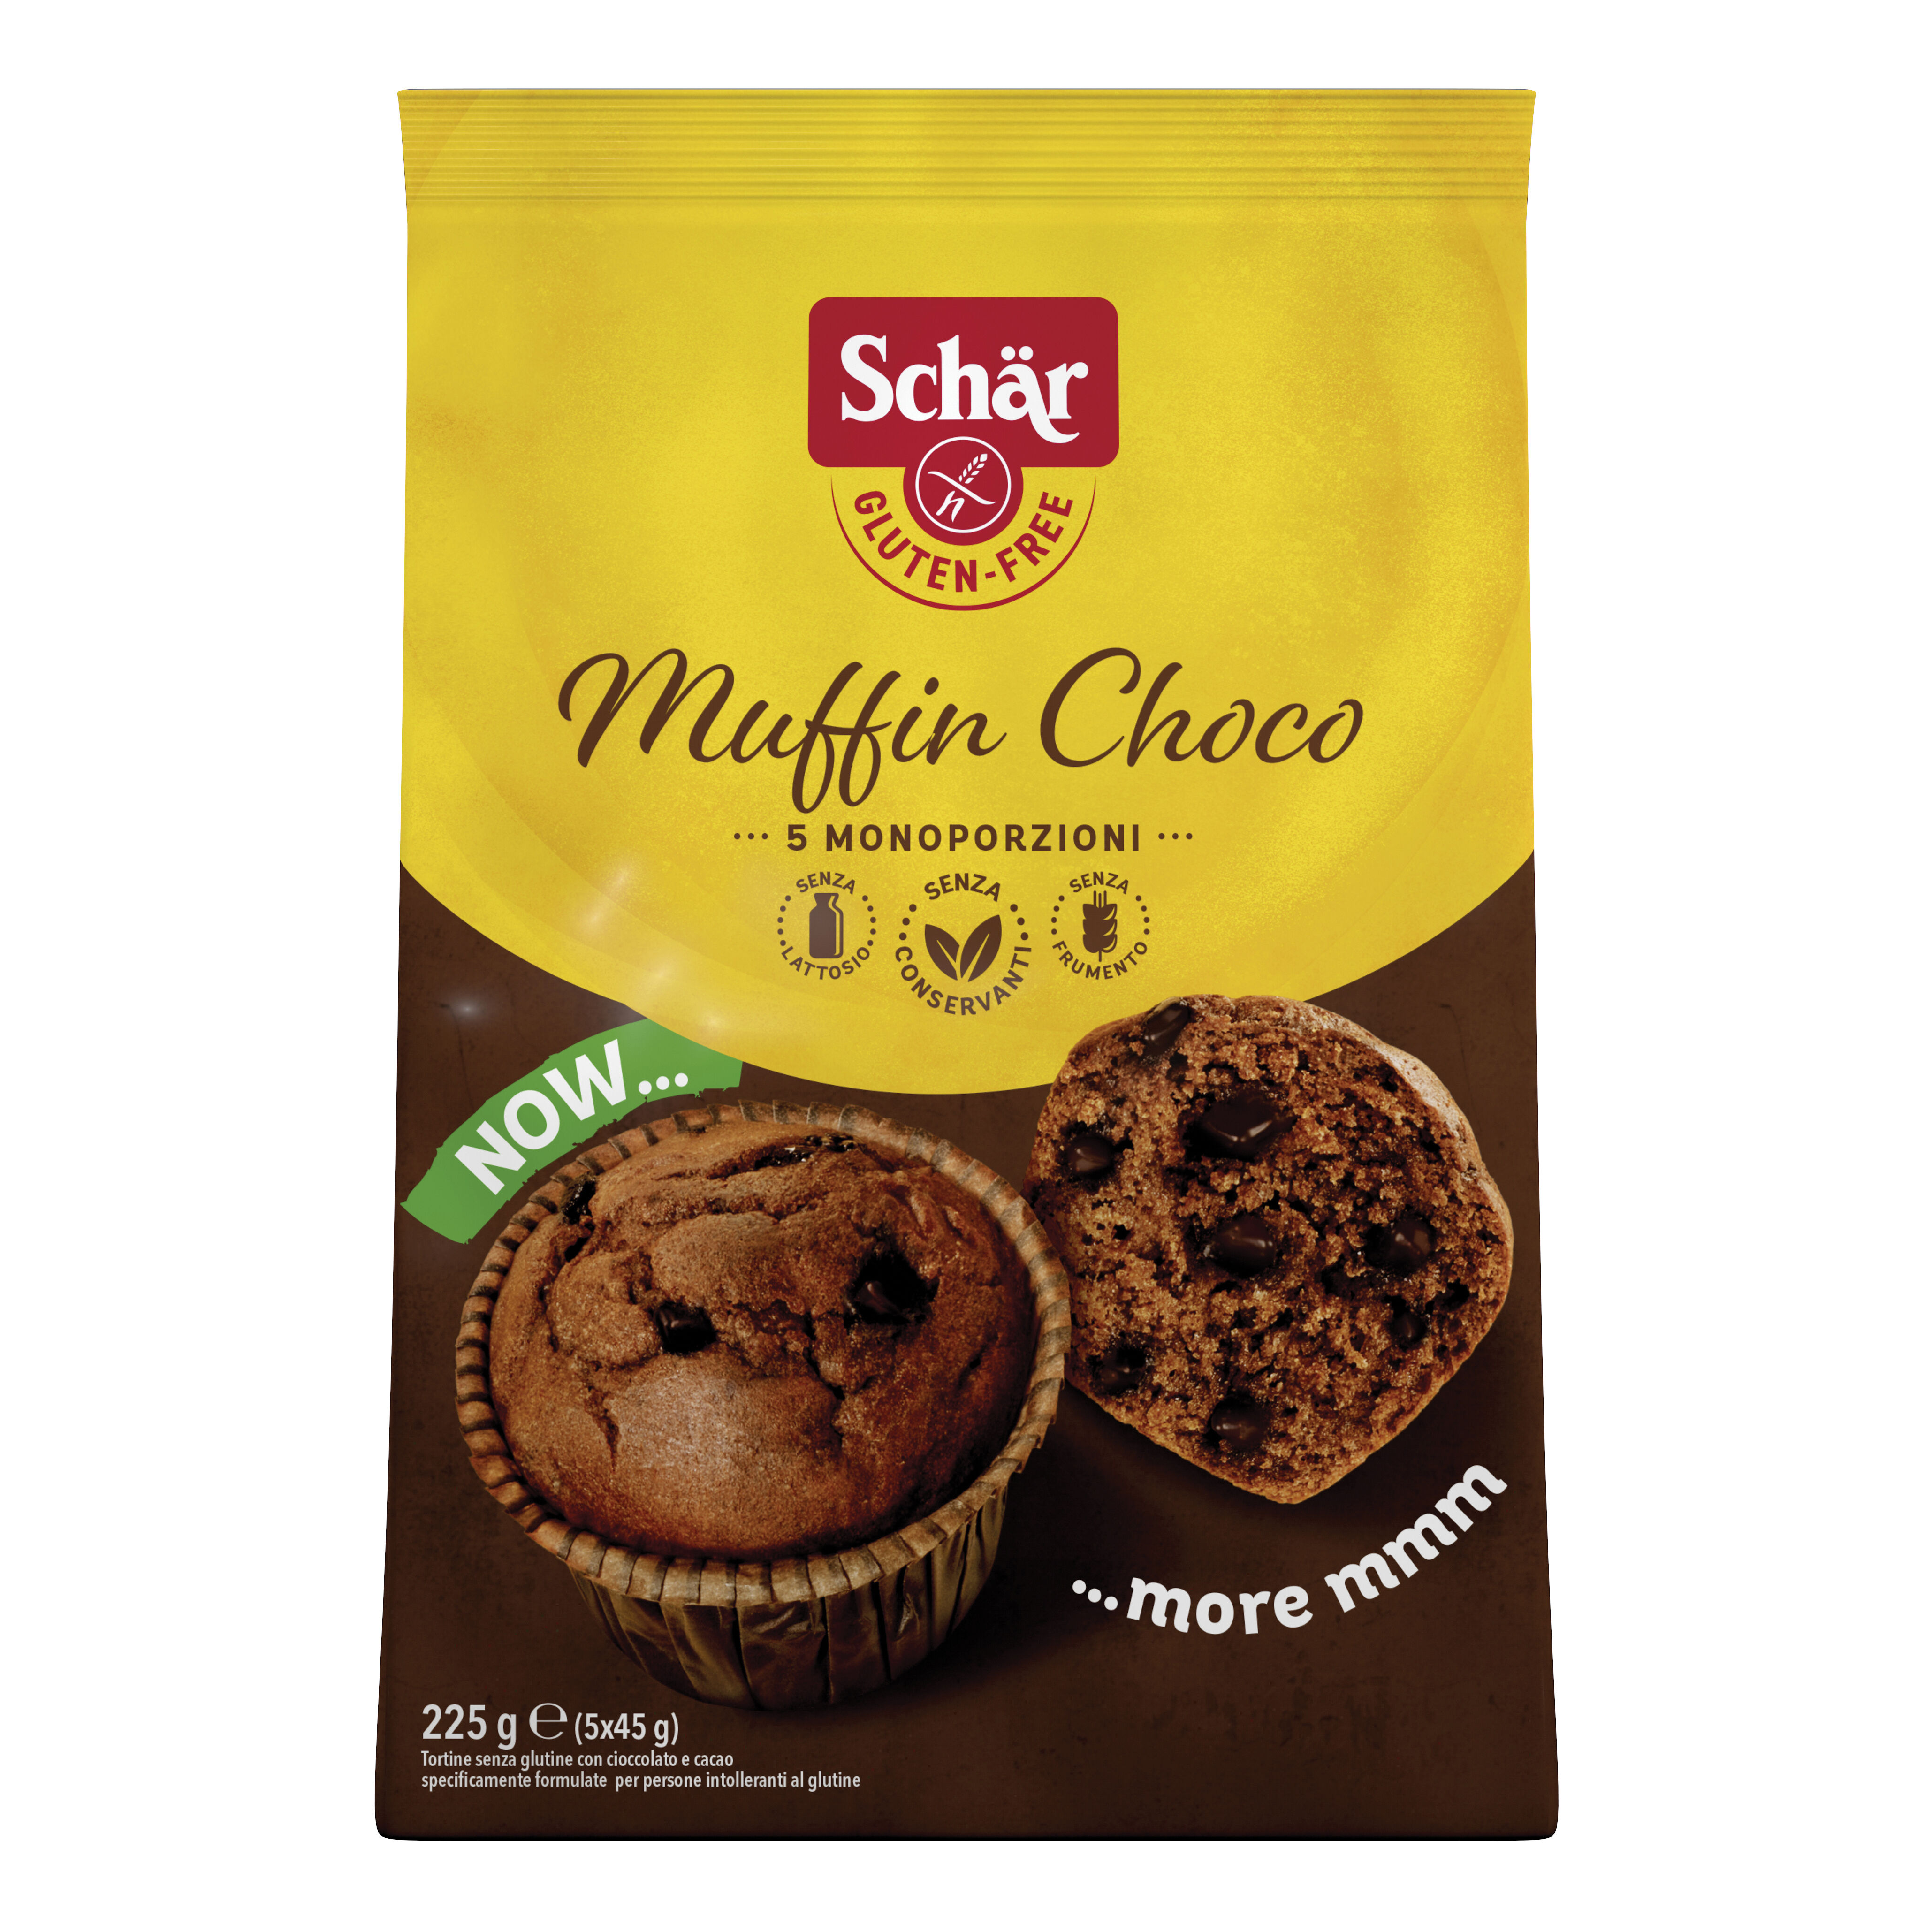 SCHAR muffin choco 225 g